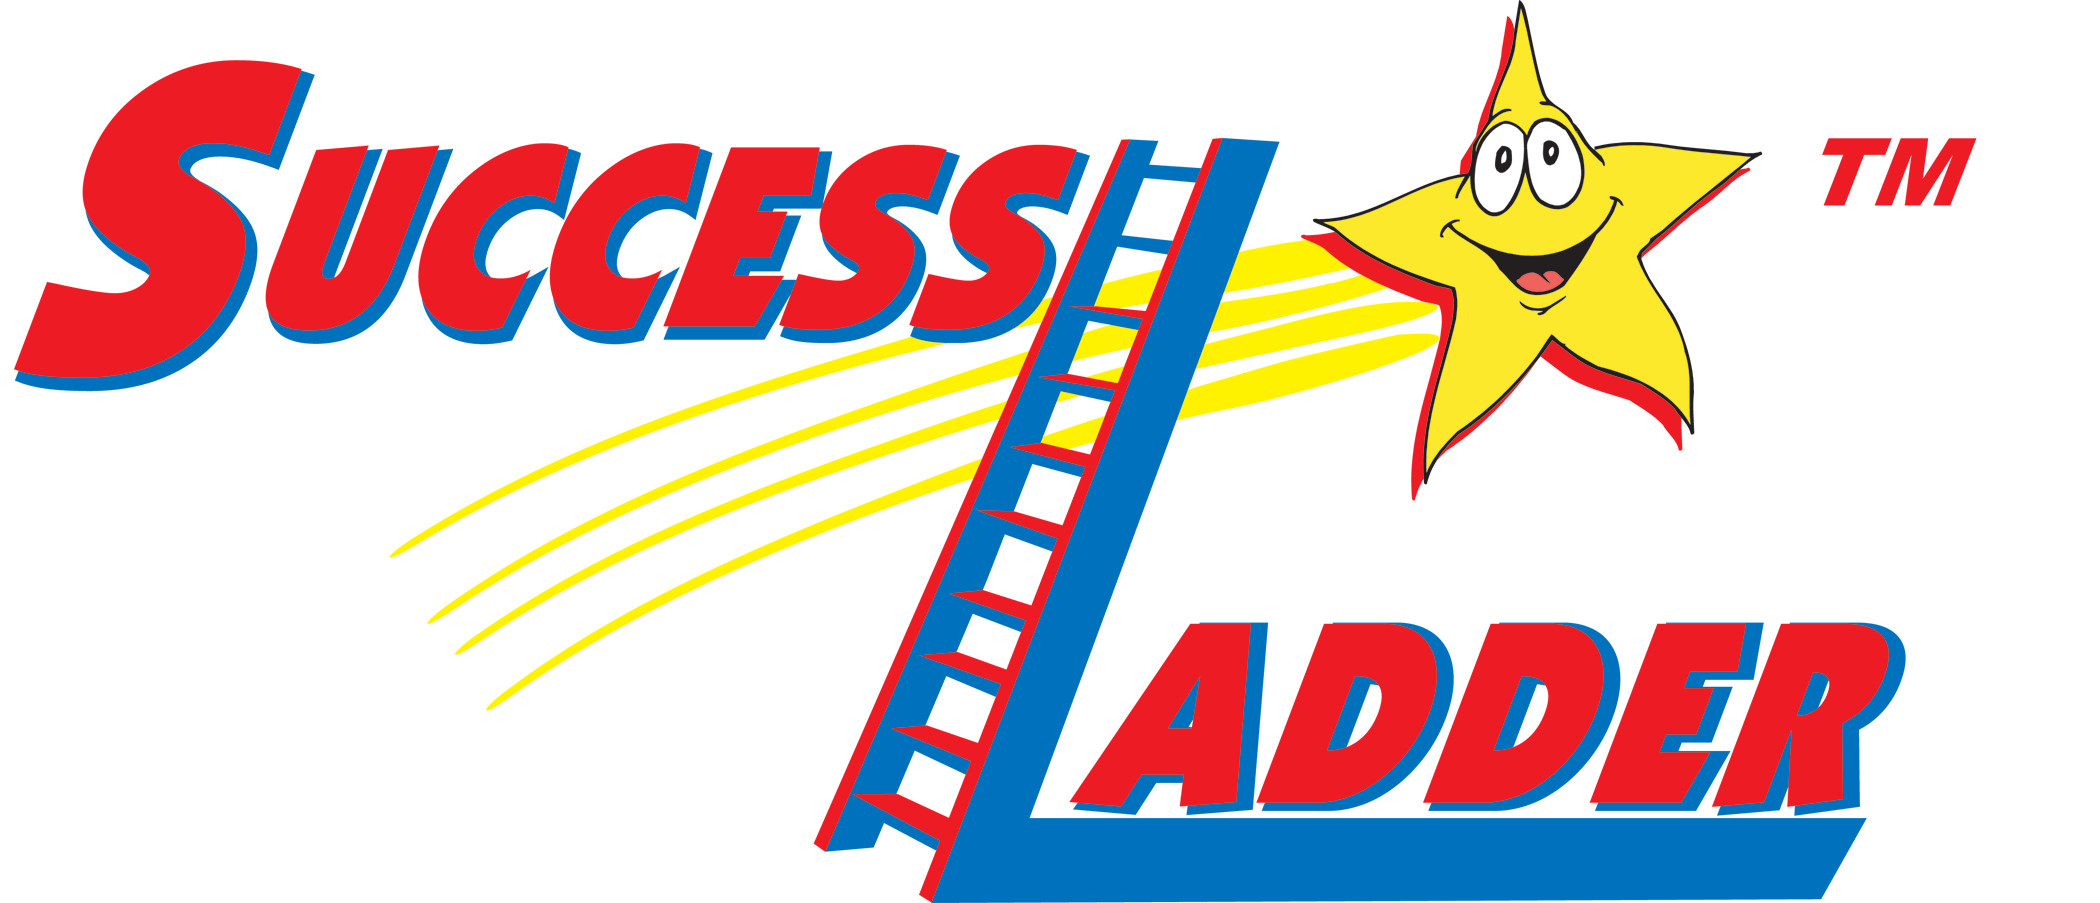 Download PNG image - Ladder of Success PNG Background Image 